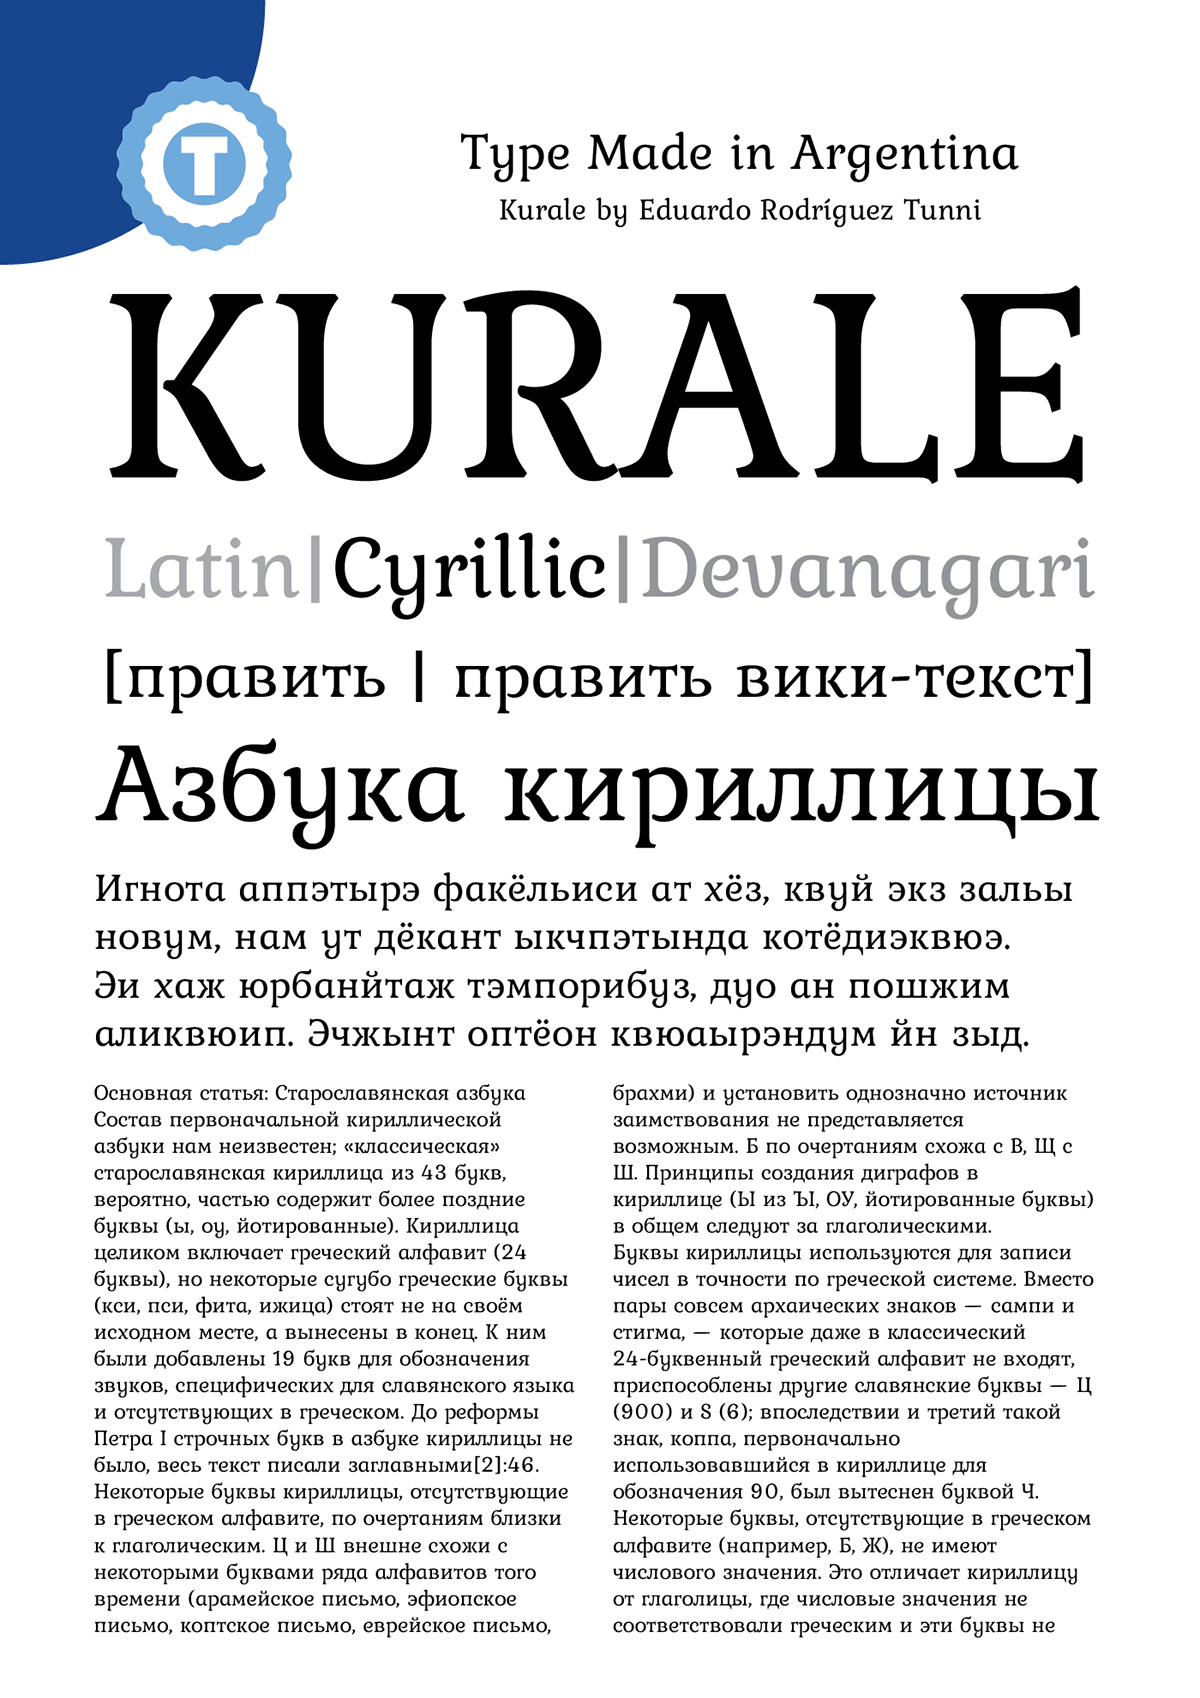 Free font google Cyrillic Eduardo Tunni argentina